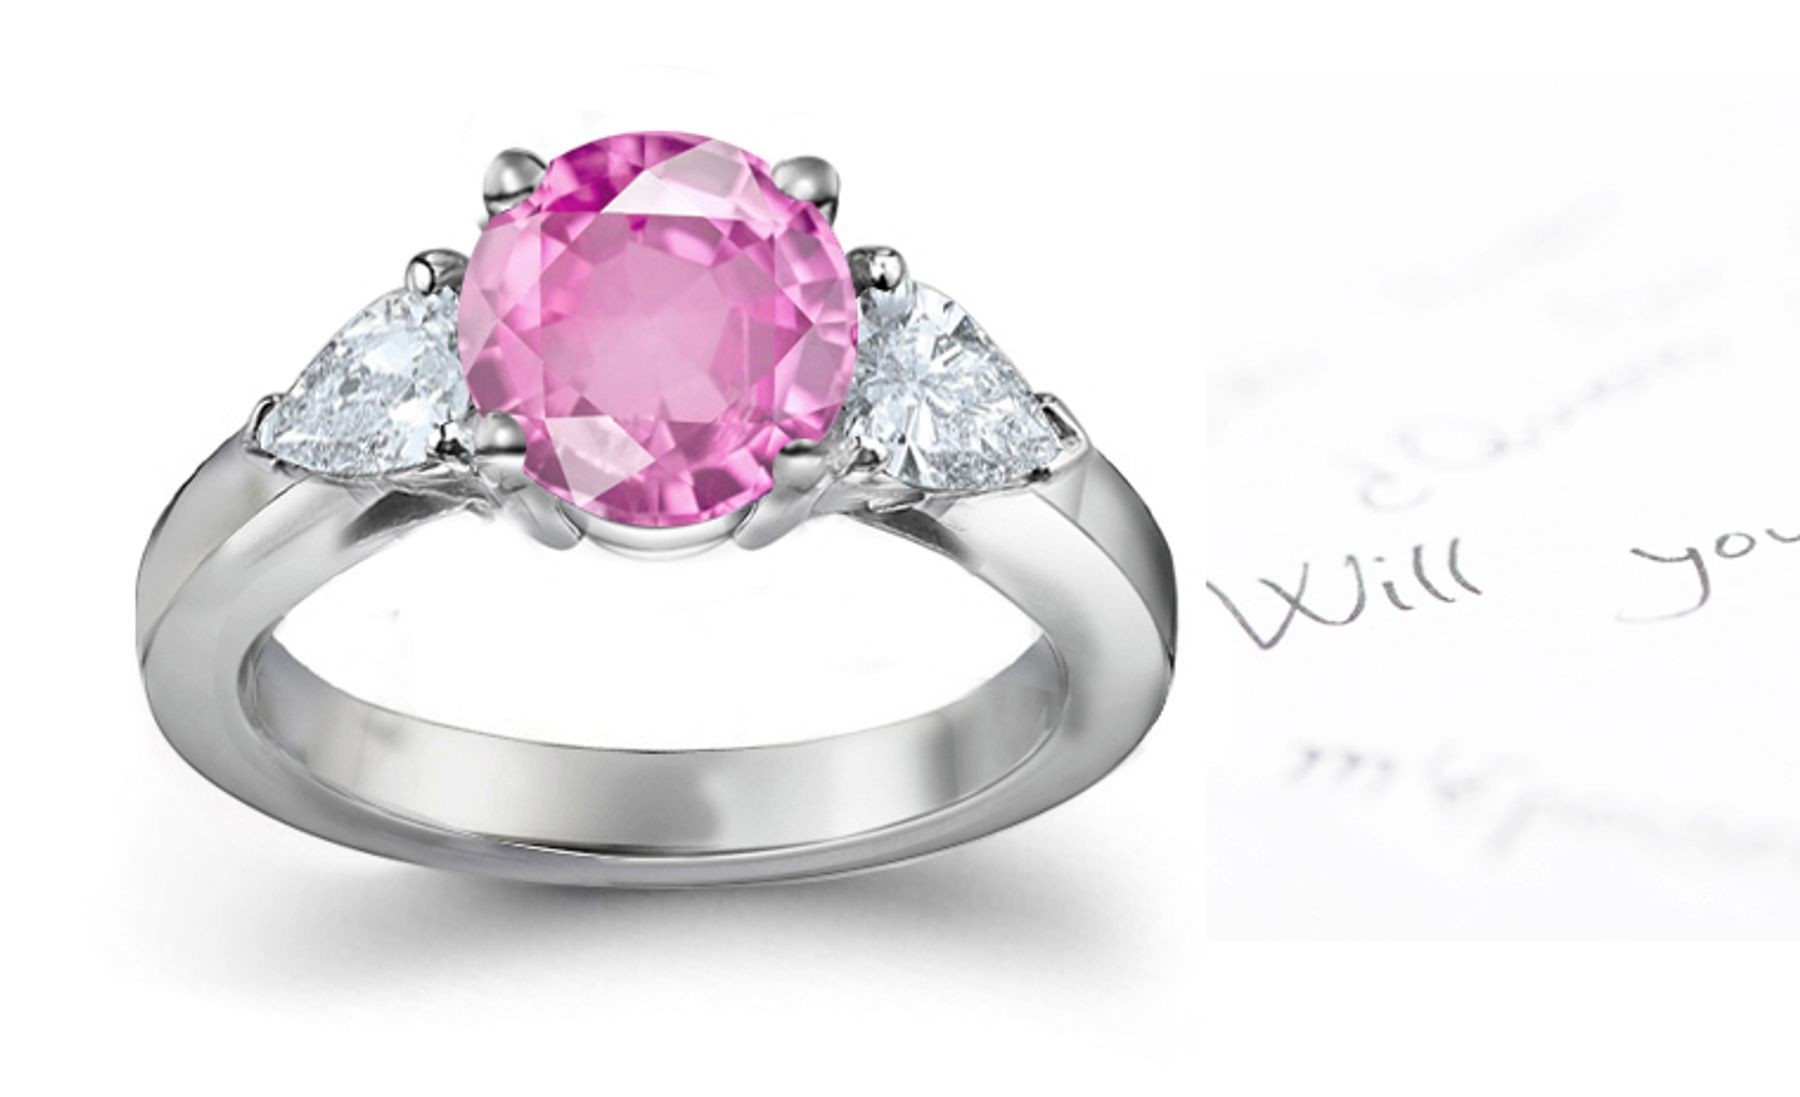 3 Stone Round Pink Celestial Sapphire & Pears White Diamond Ring in Platinum & 14k Gold